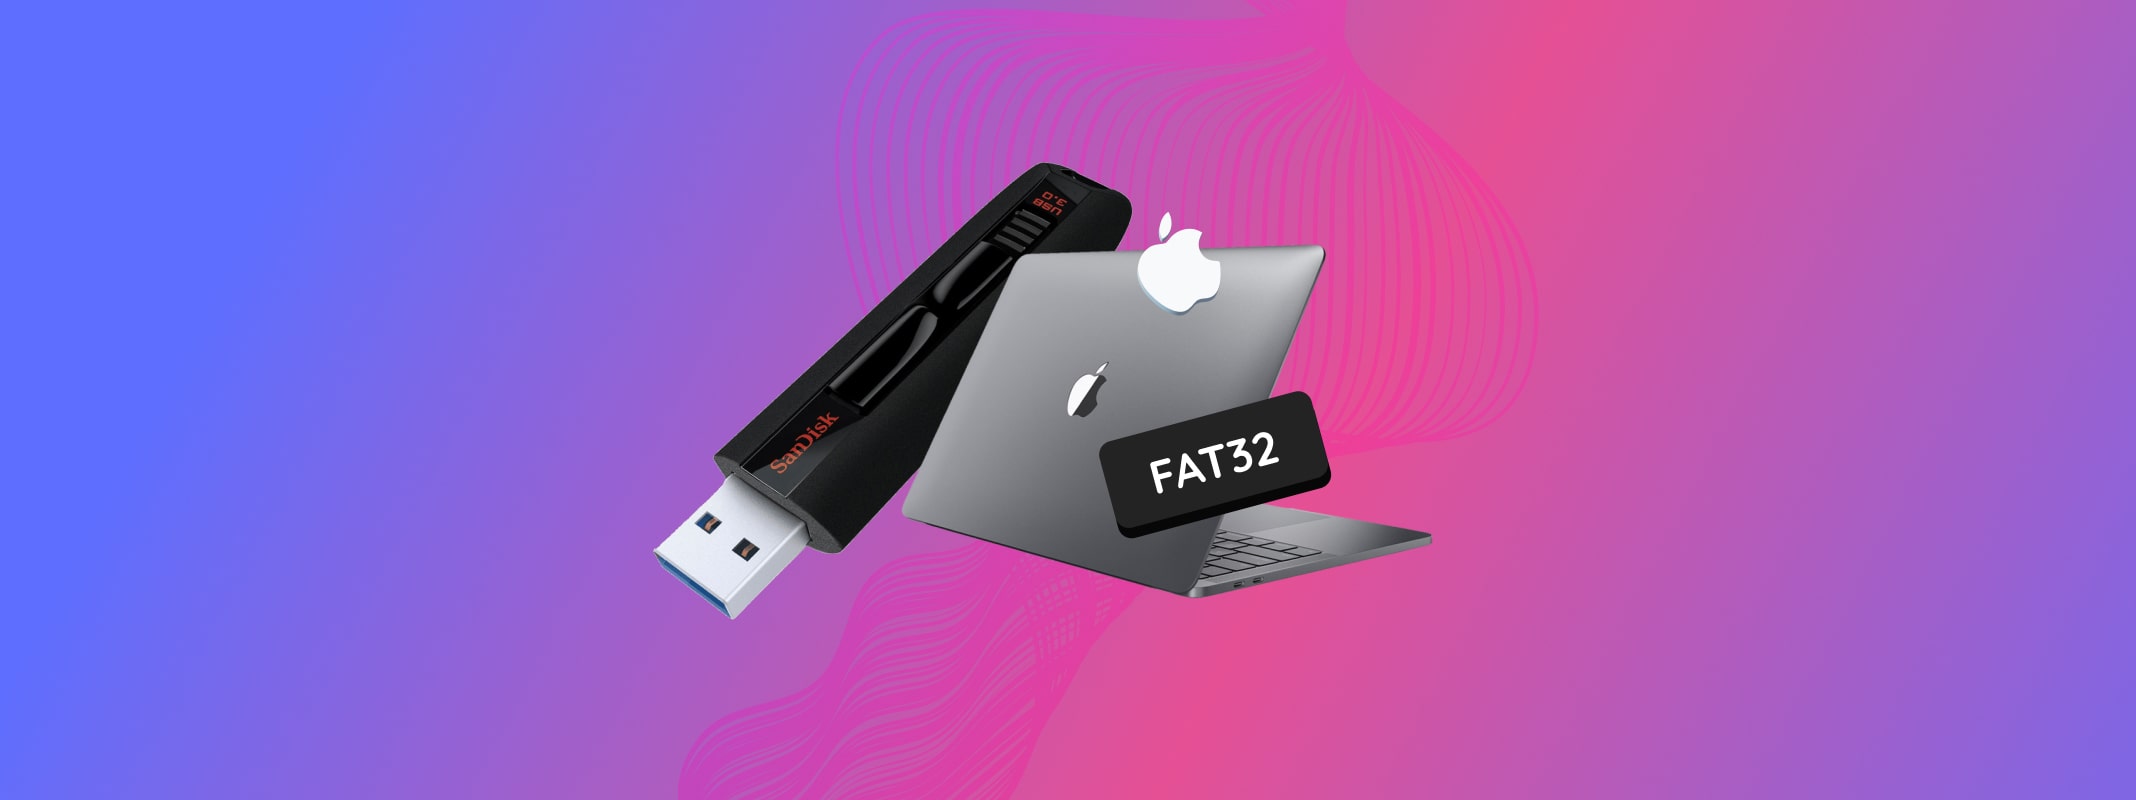 reformatting external hard drive to fat 32